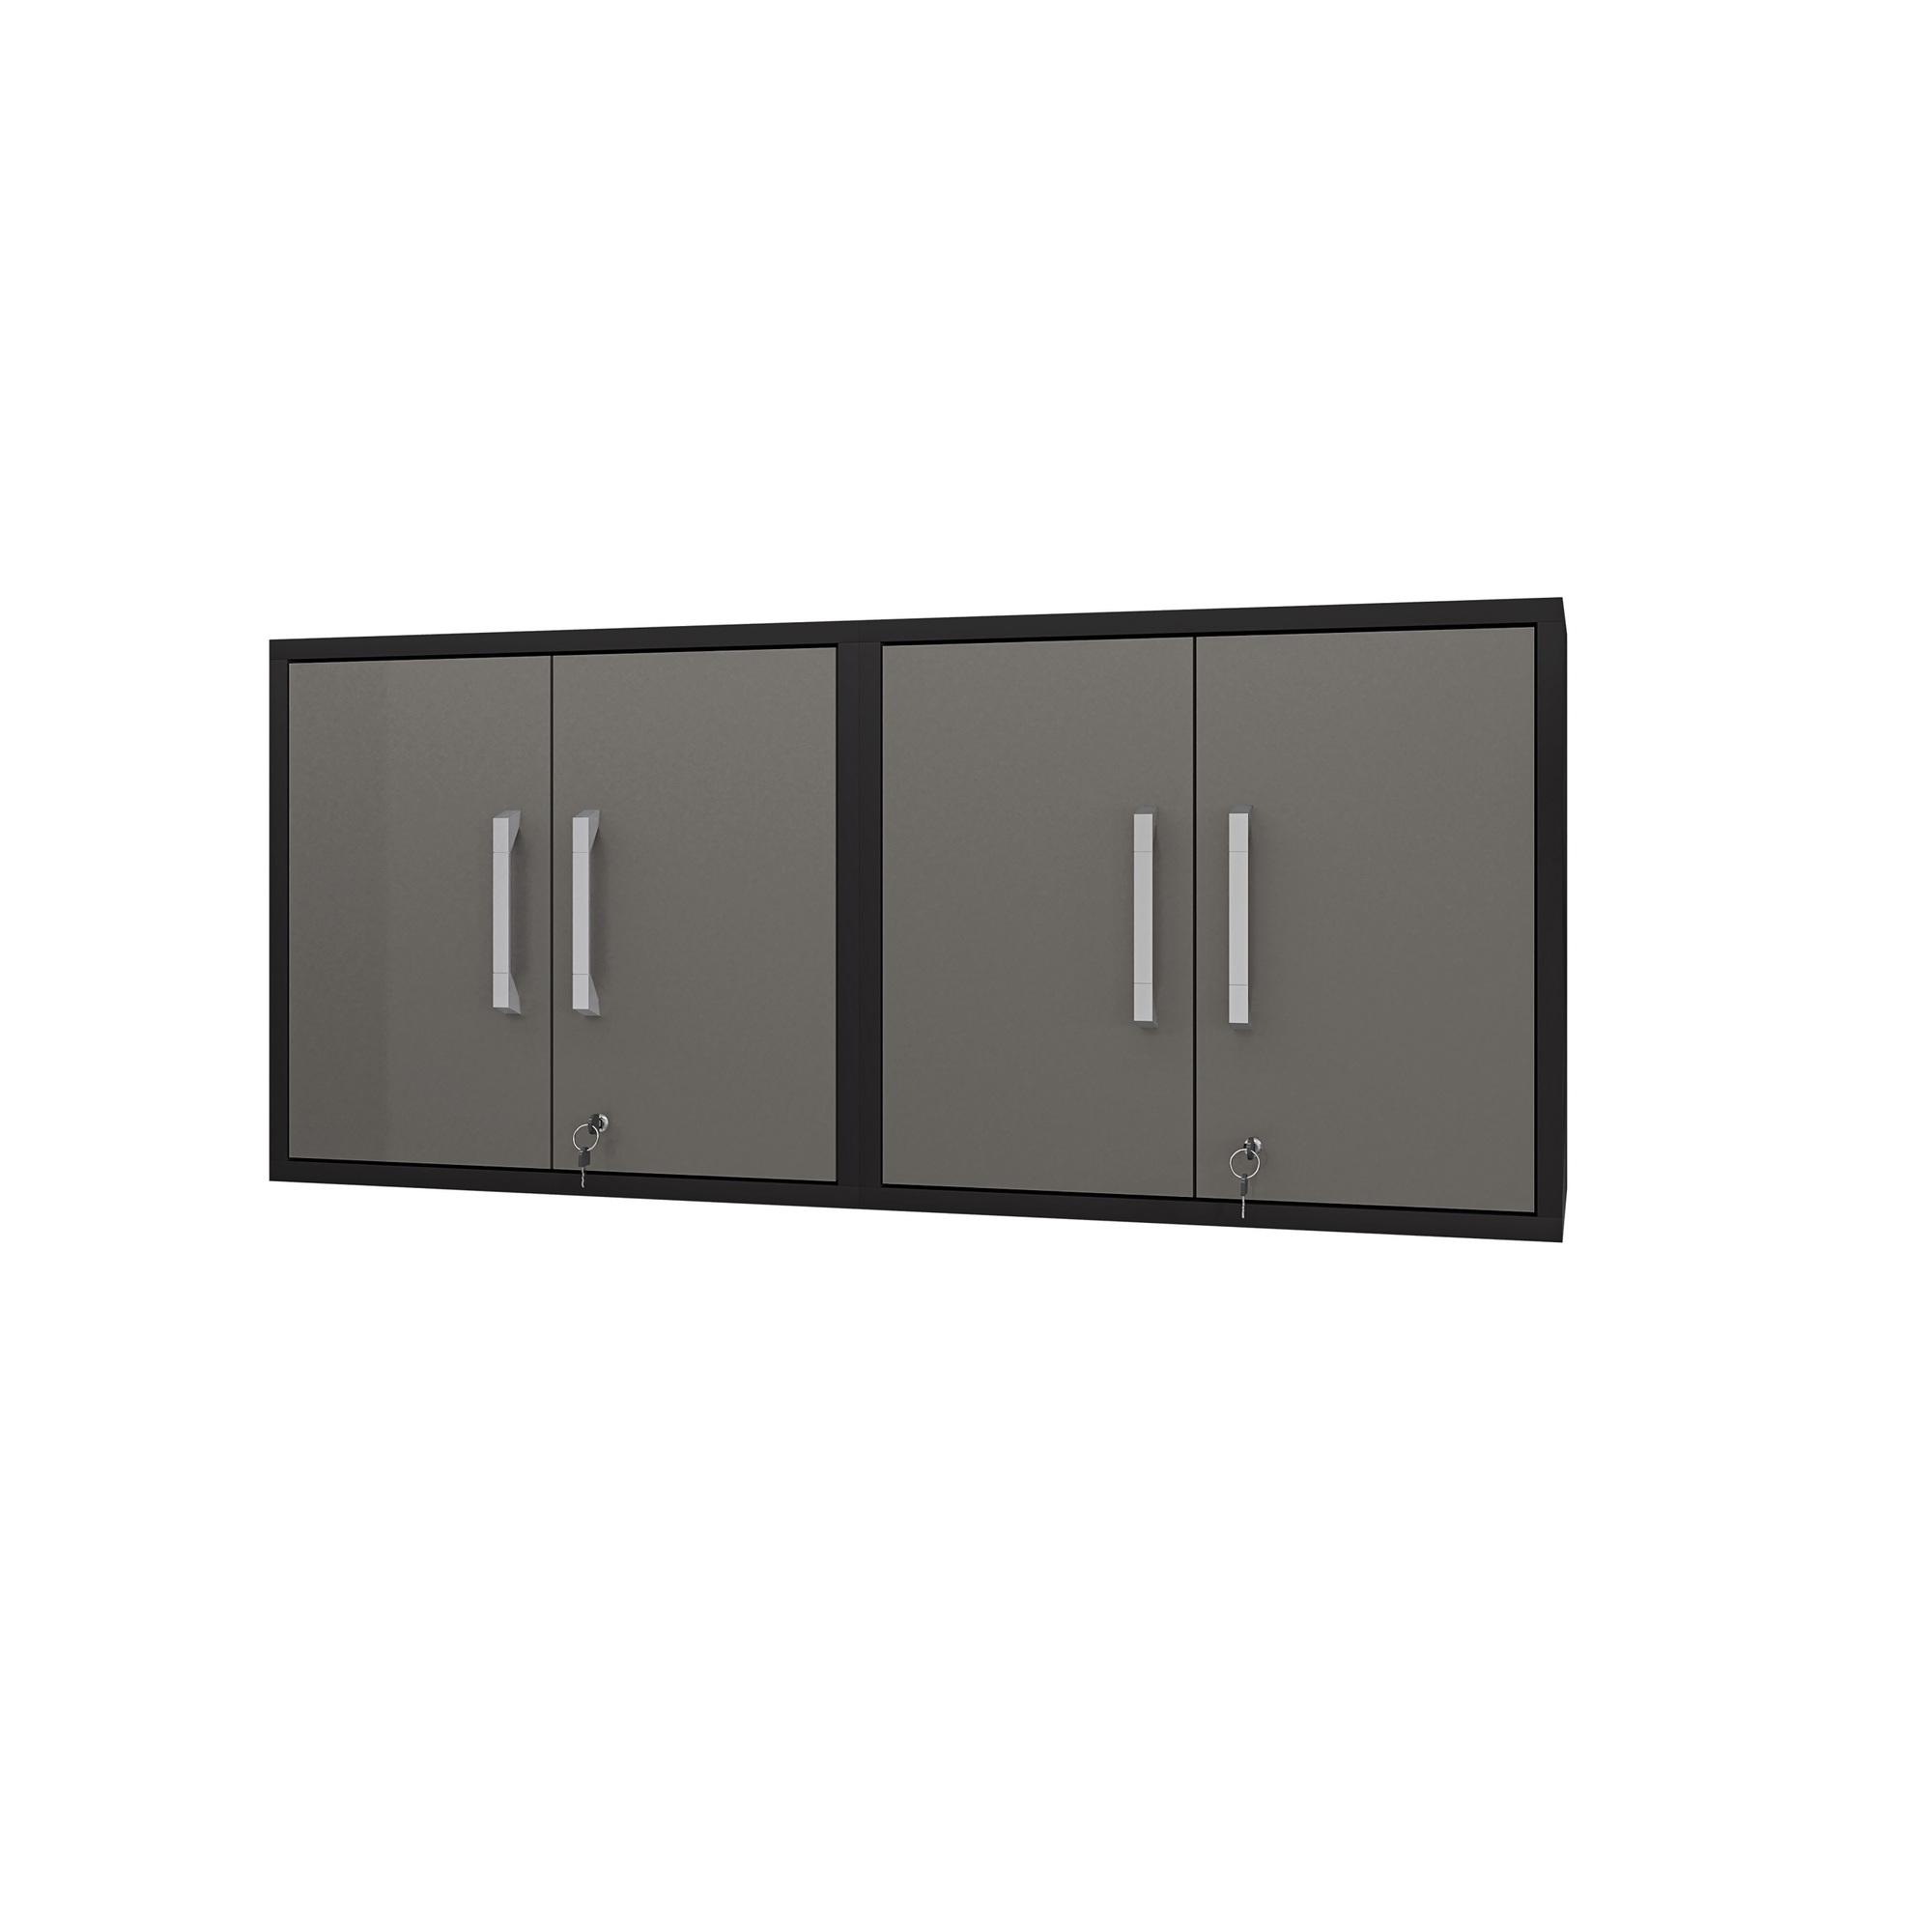 Manhattan Comfort, Eiffel Floating Garage Cabinet Black Grey Set of 2 Height 25.59 in, Width 56.7 in, Color Gray, Model 2-251BMC